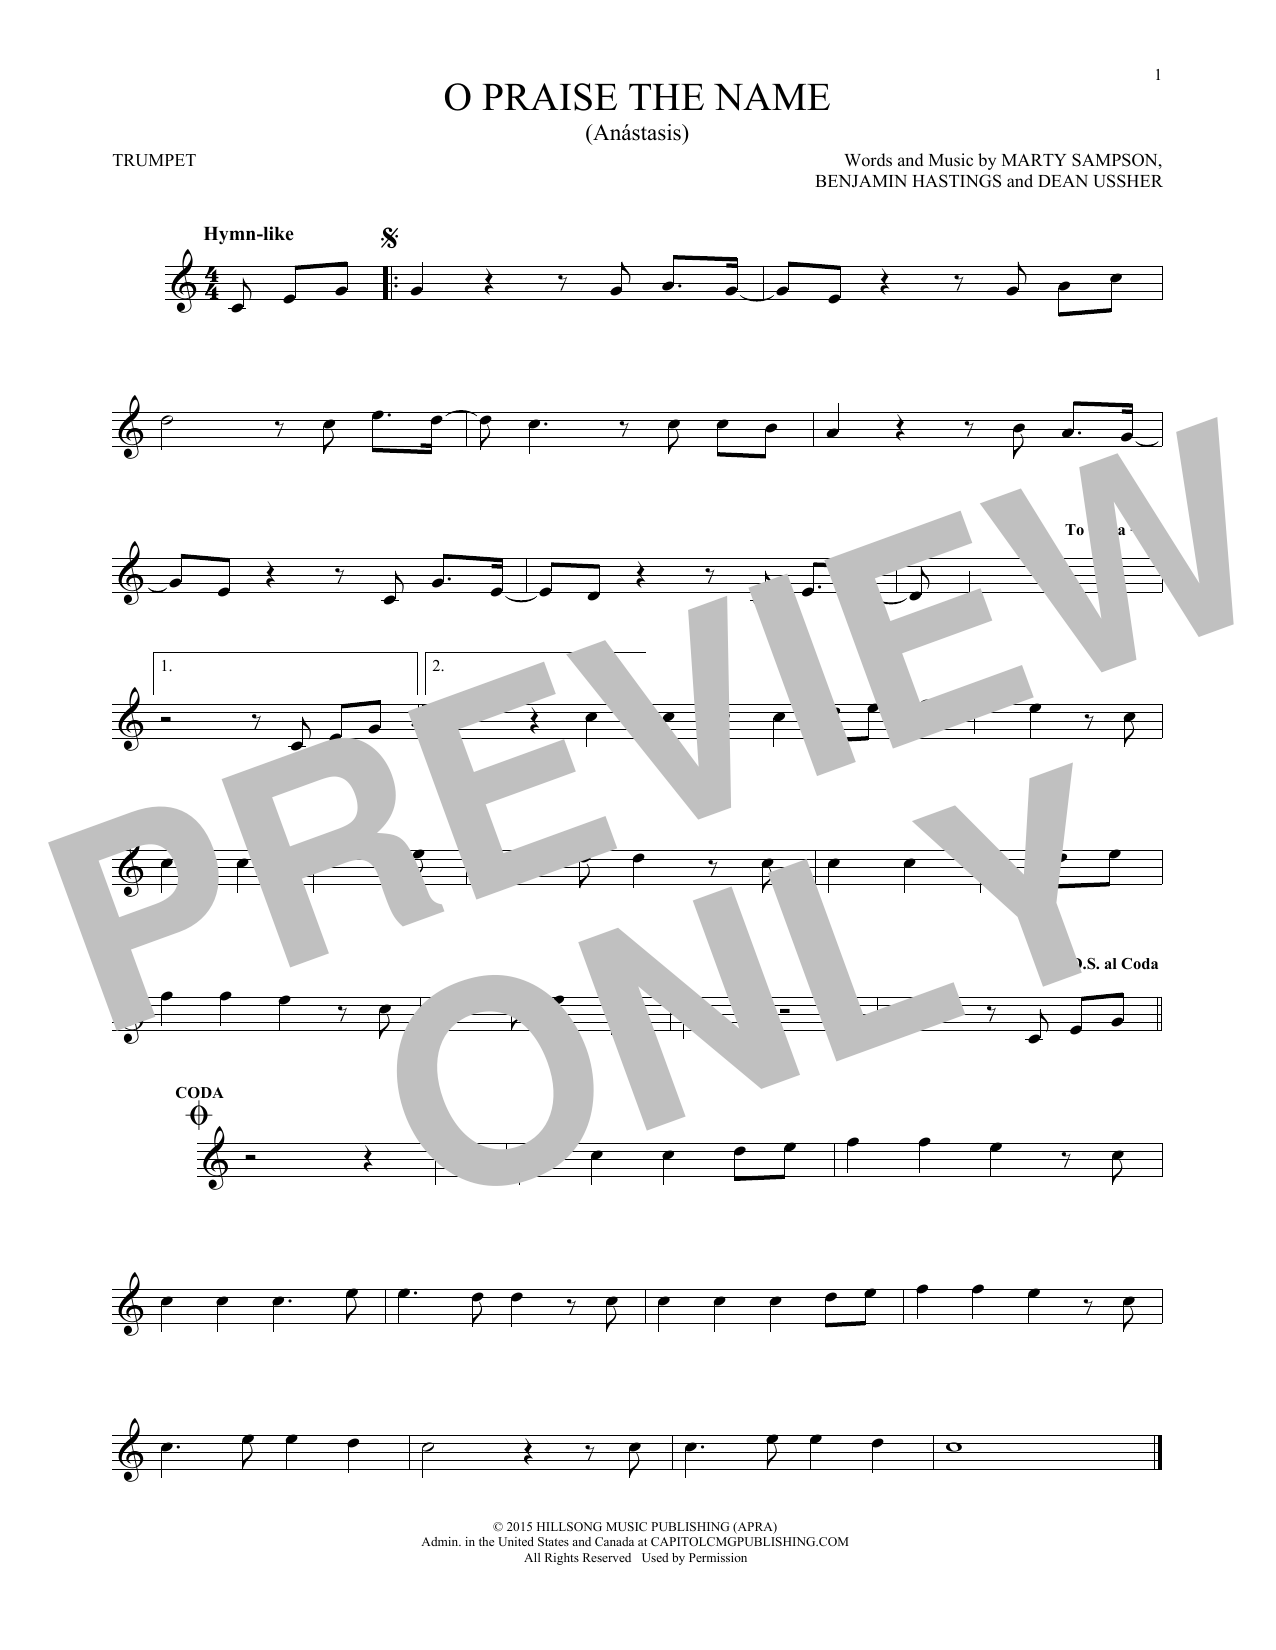 Hillsong Worship O Praise The Name (Anastasis) Sheet Music Notes & Chords for Solo Guitar Tab - Download or Print PDF